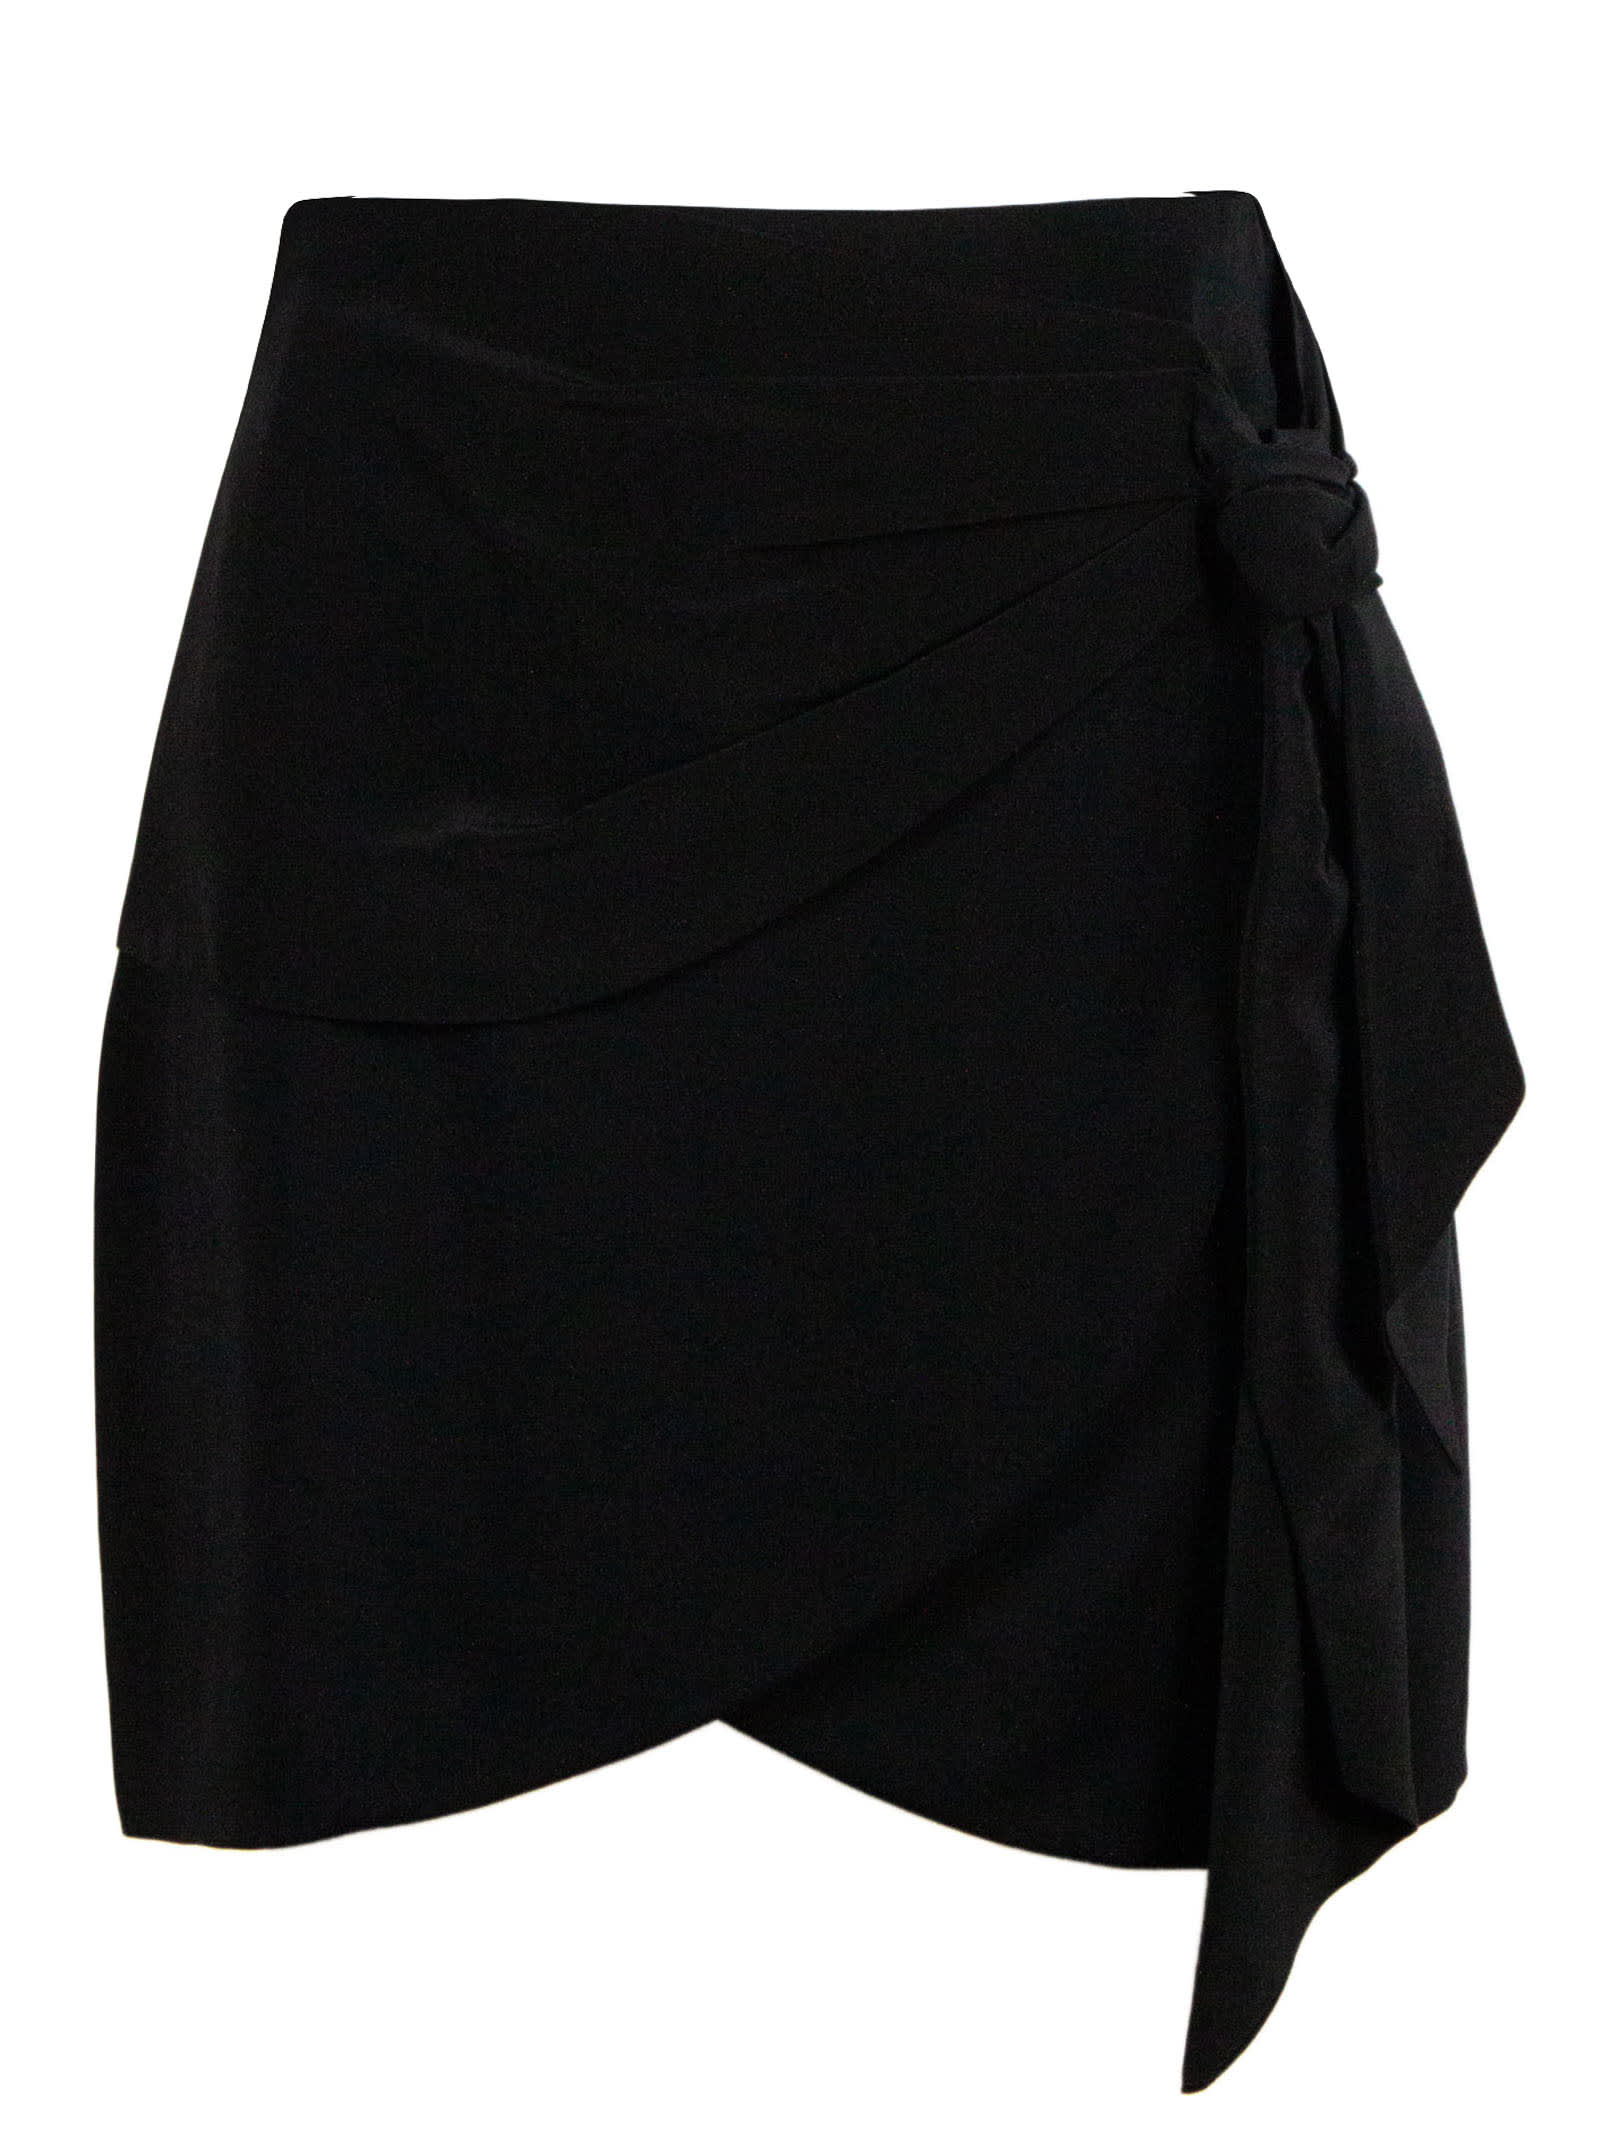 Federica Tosi Black Asymmetrical Skirt